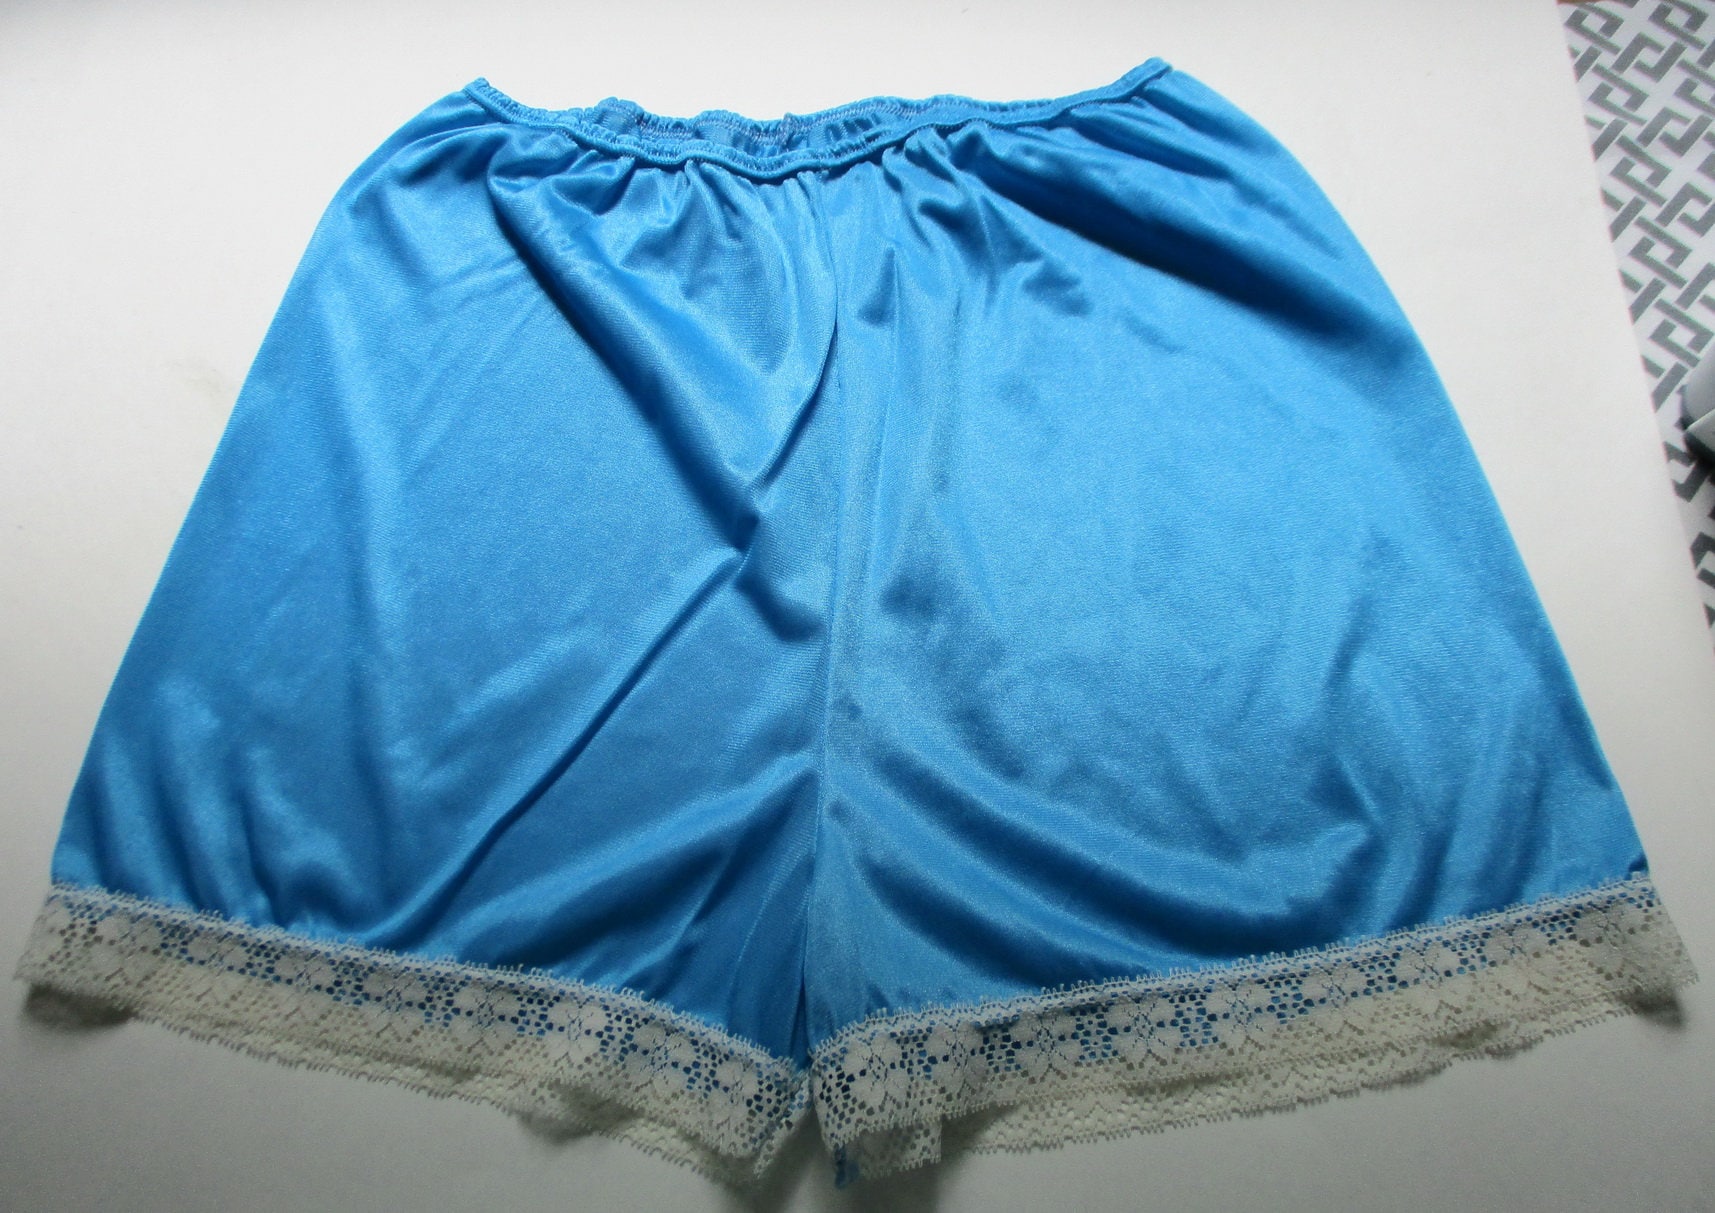 Lingerie Nylon Girl Panties Stockings Retro